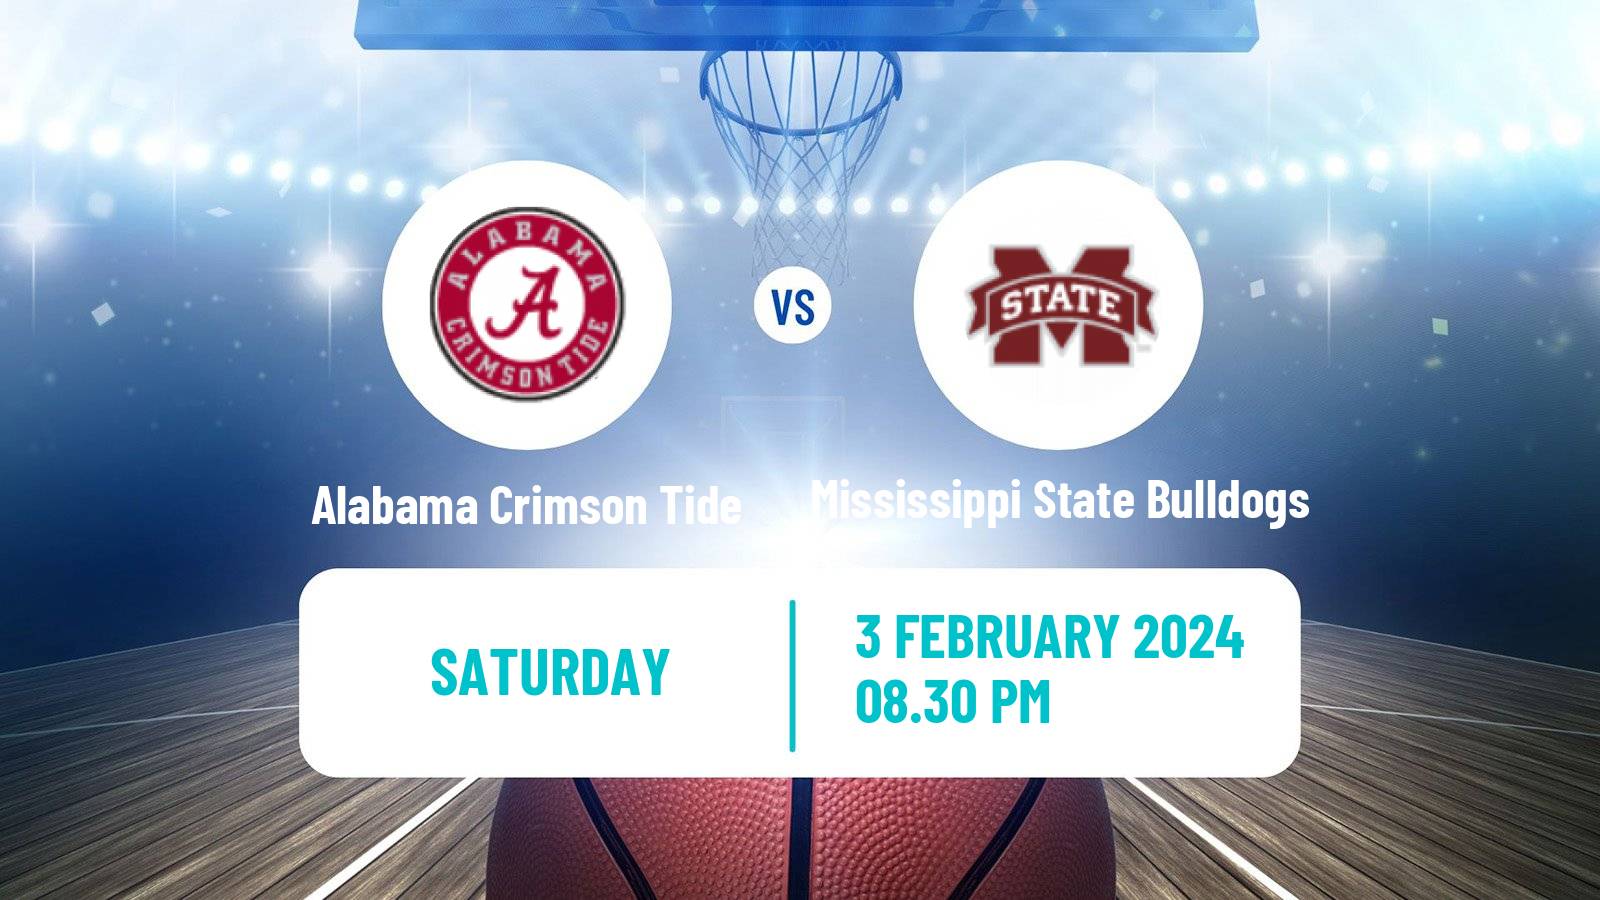 Basketball NCAA College Basketball Alabama Crimson Tide - Mississippi State Bulldogs